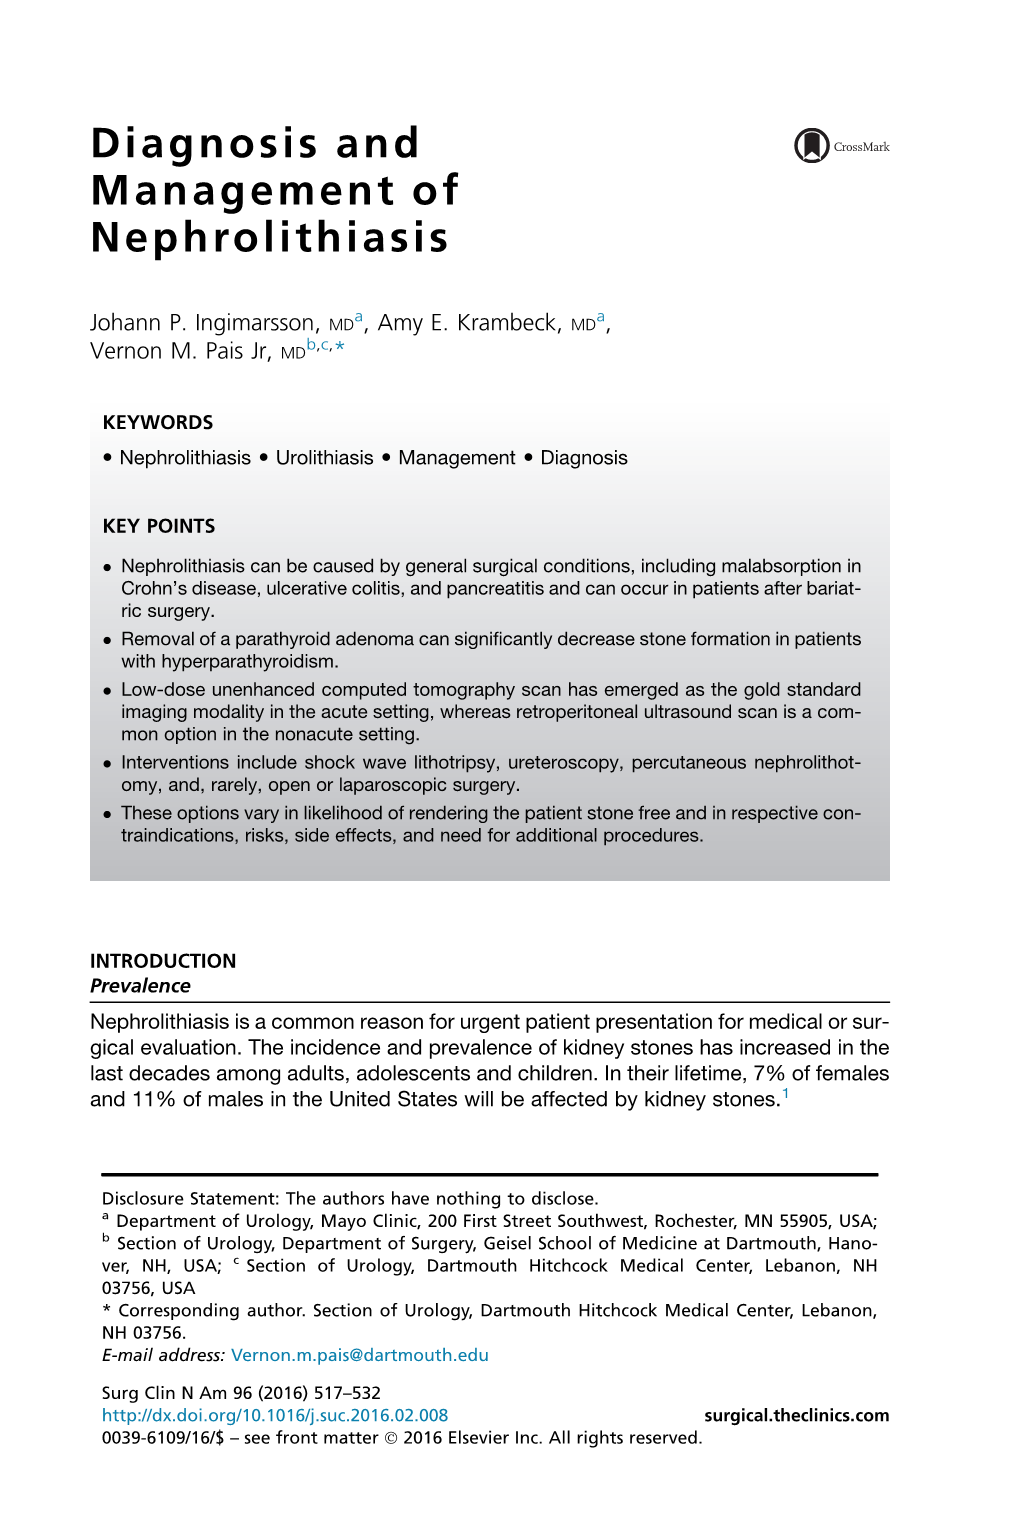 Diagnosis and Management of Nephrolithiasis